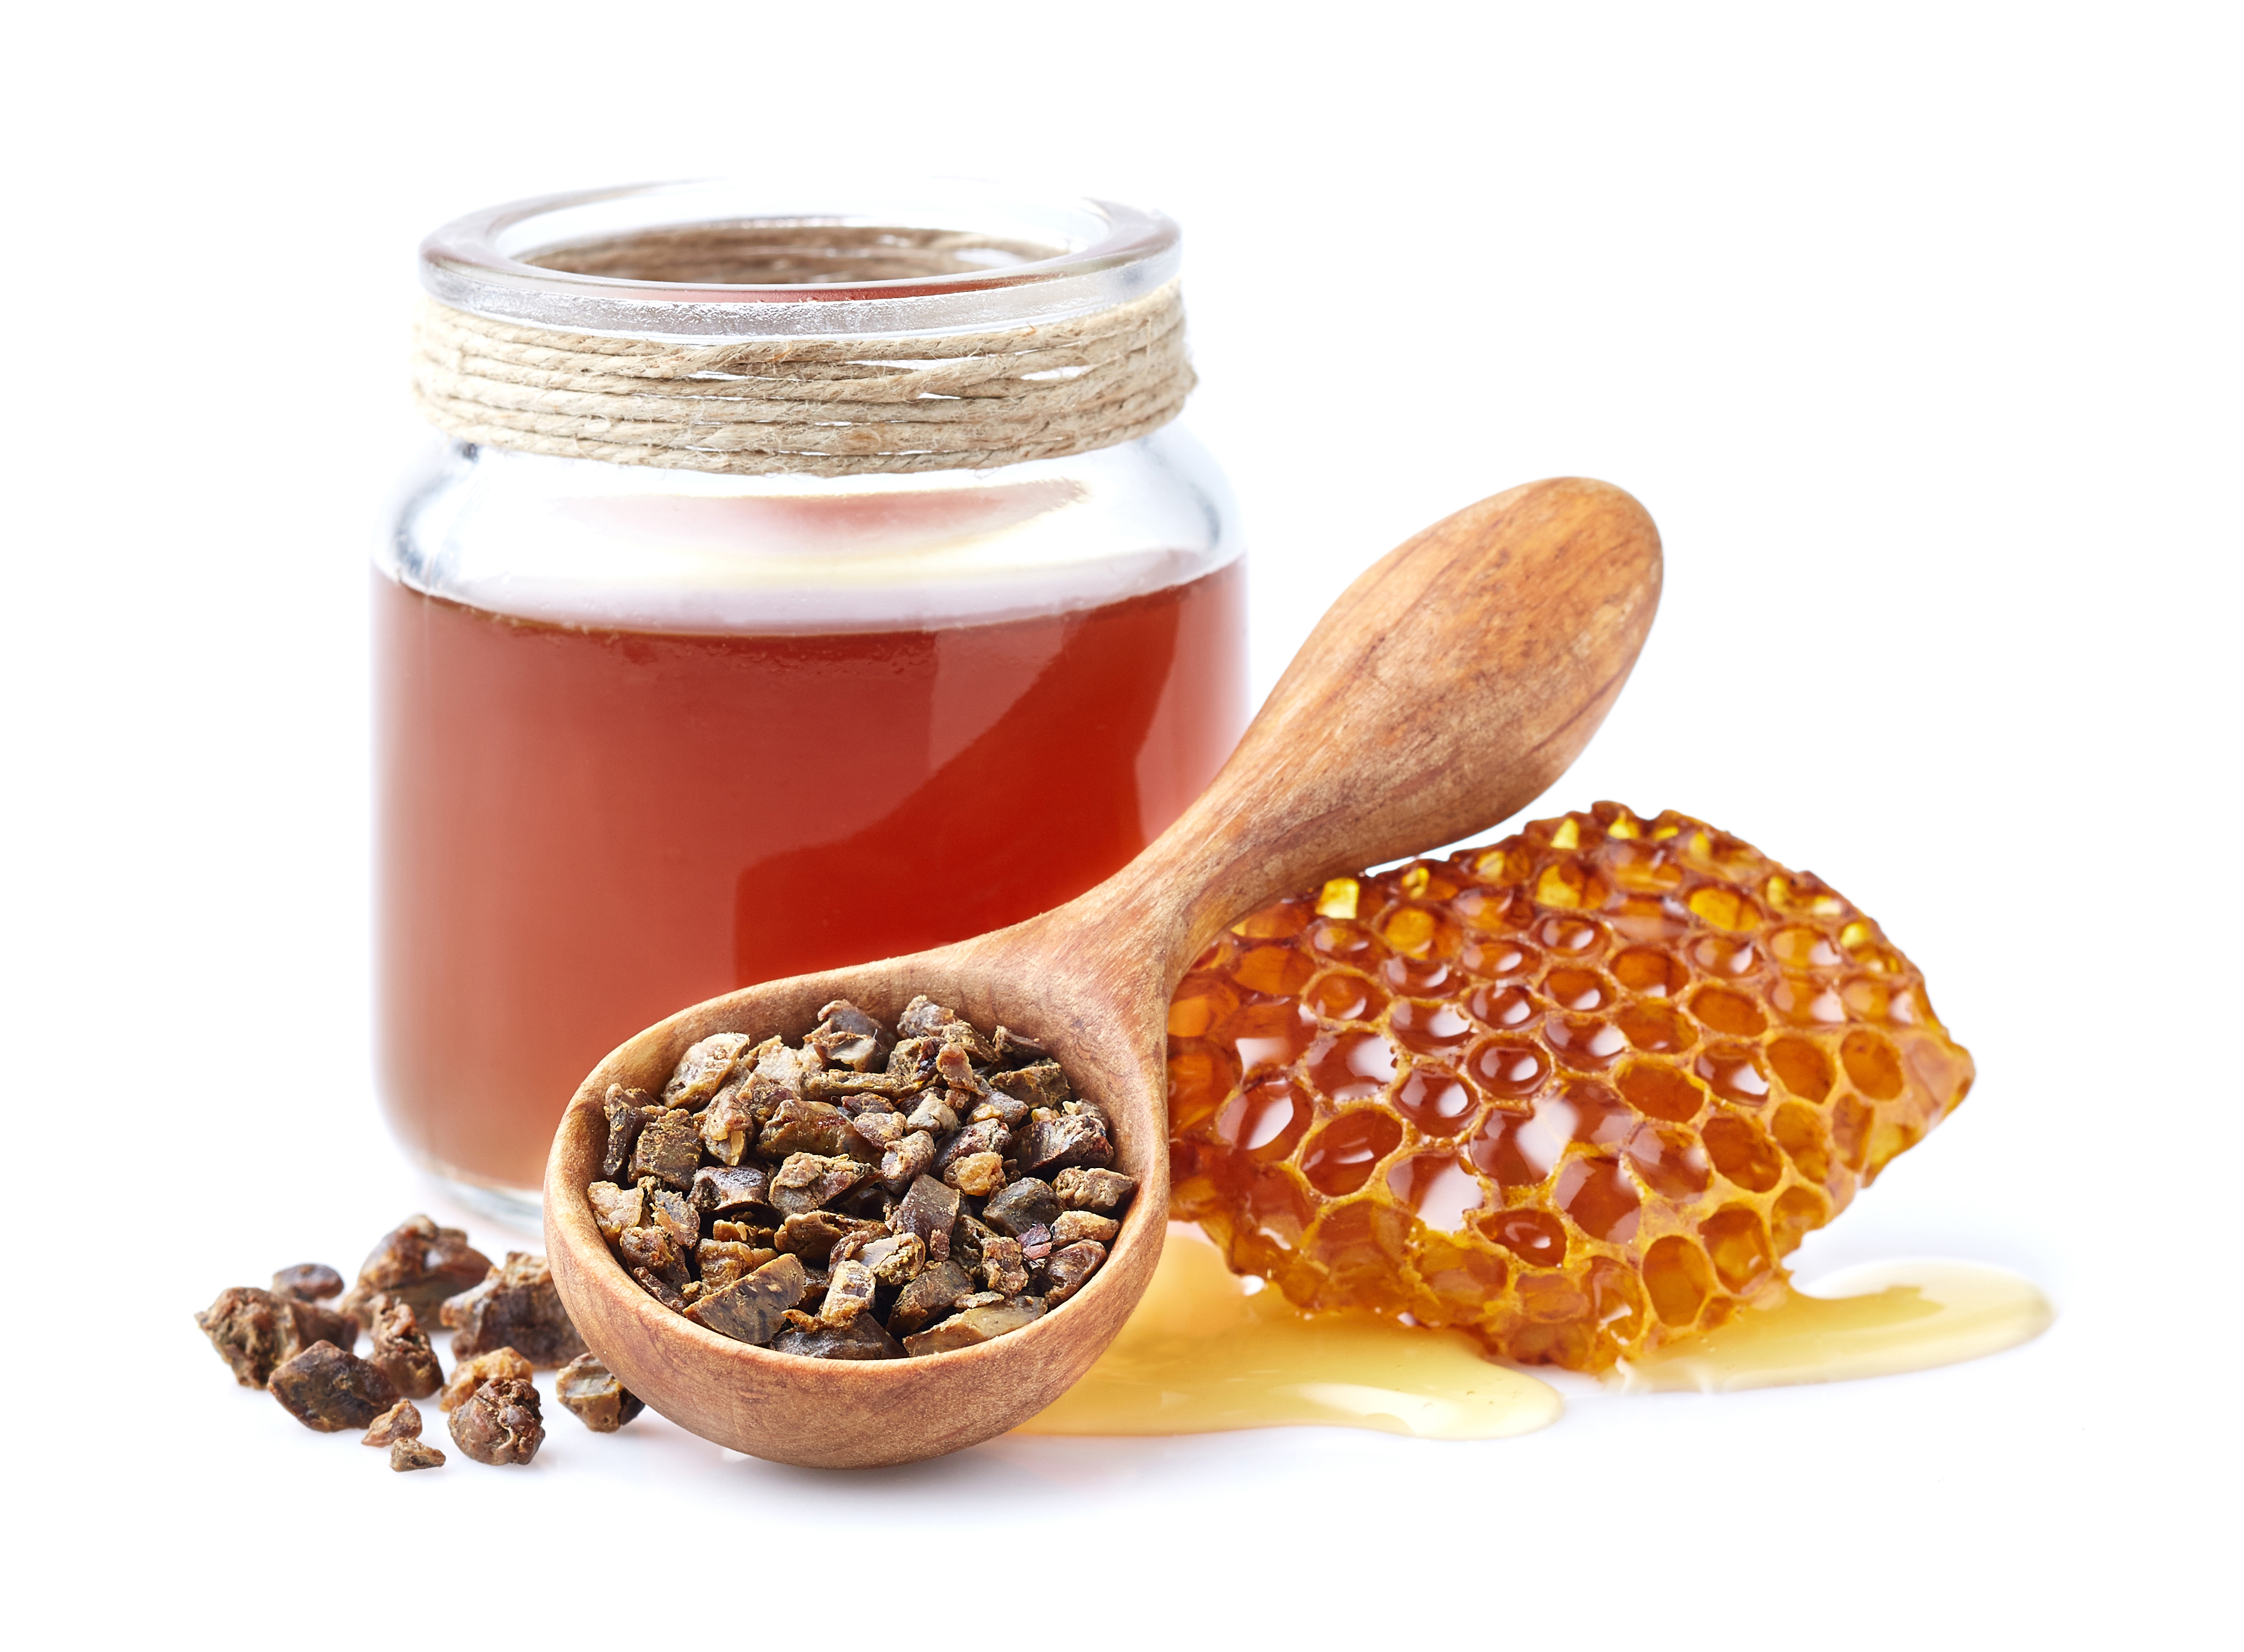 Les produits de la ruche : le miel